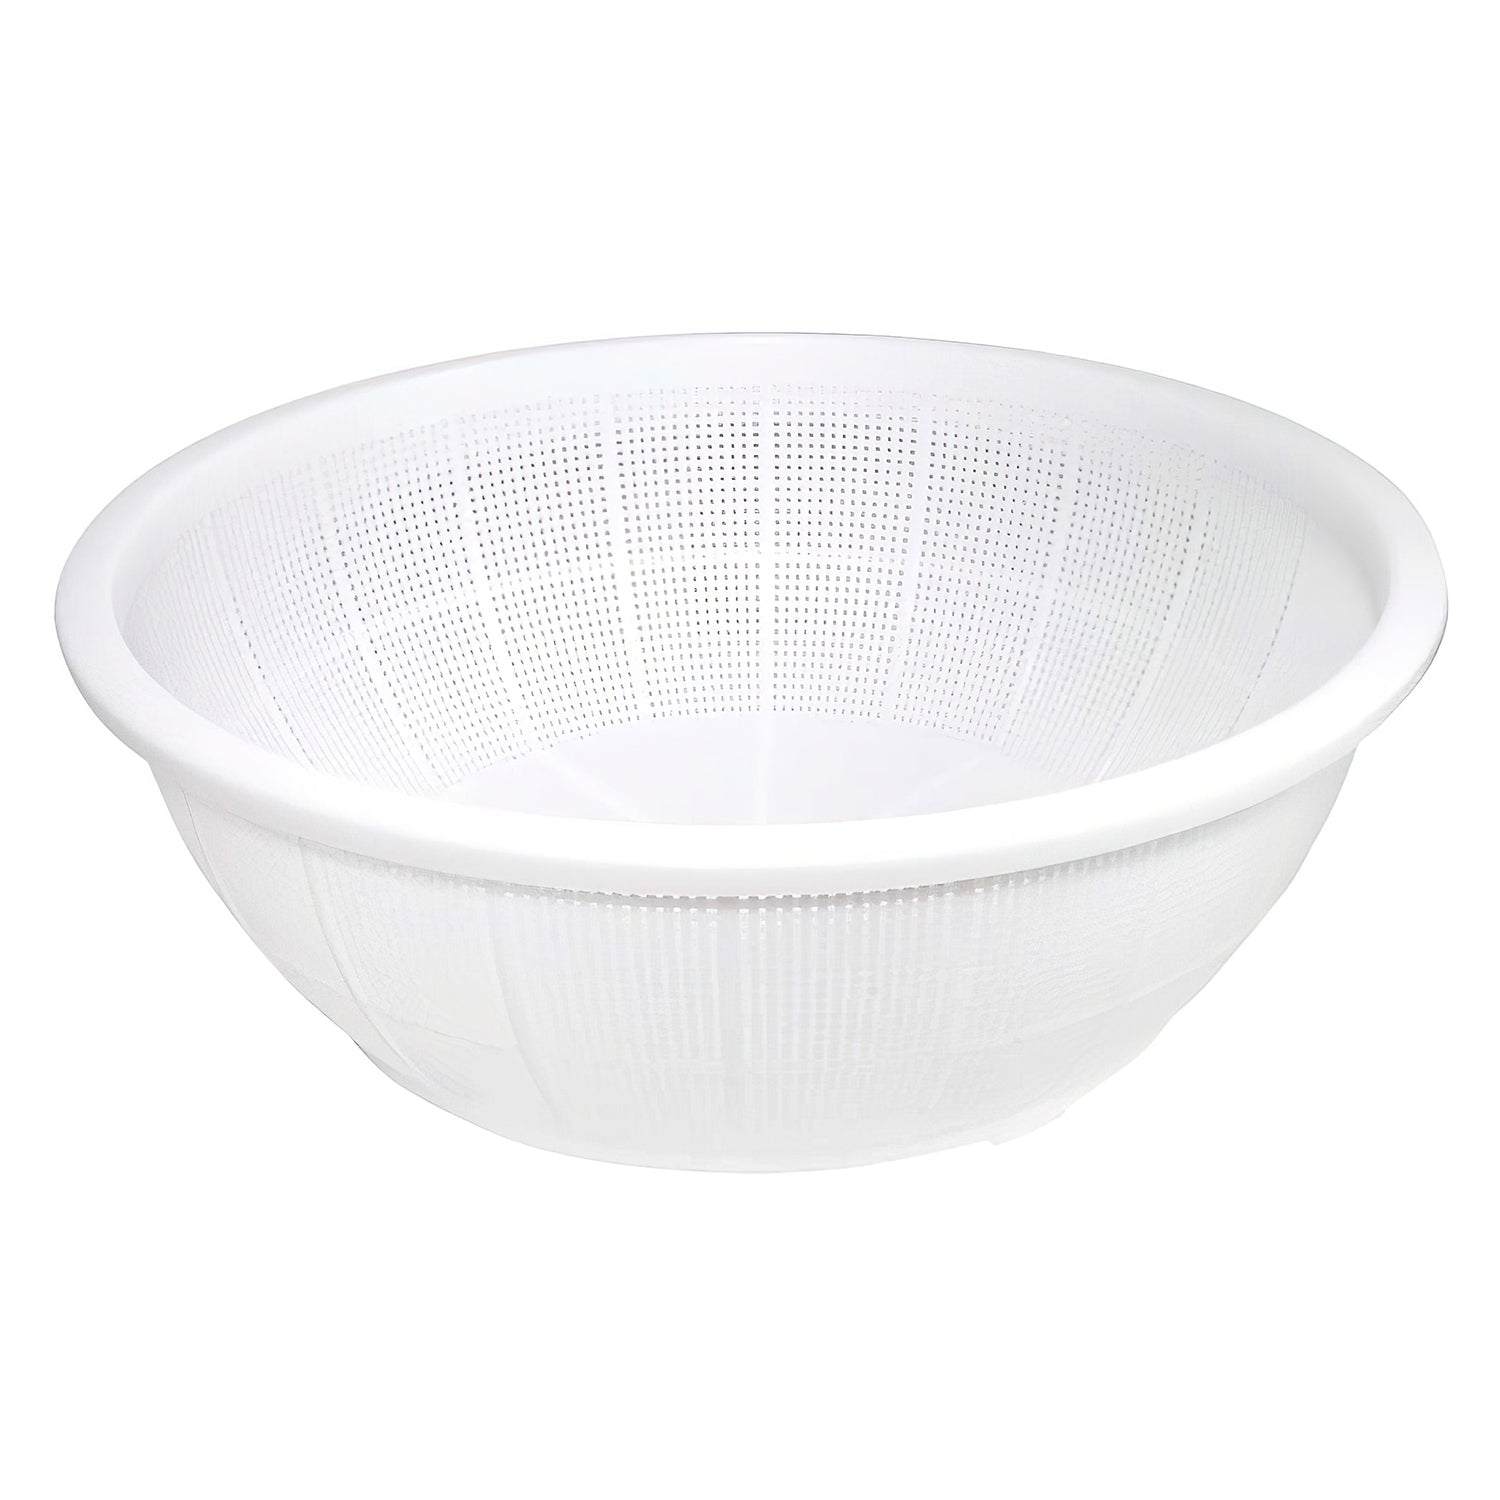 Ikeda Plastic Colander - White, the Perfect Kitchen Essential